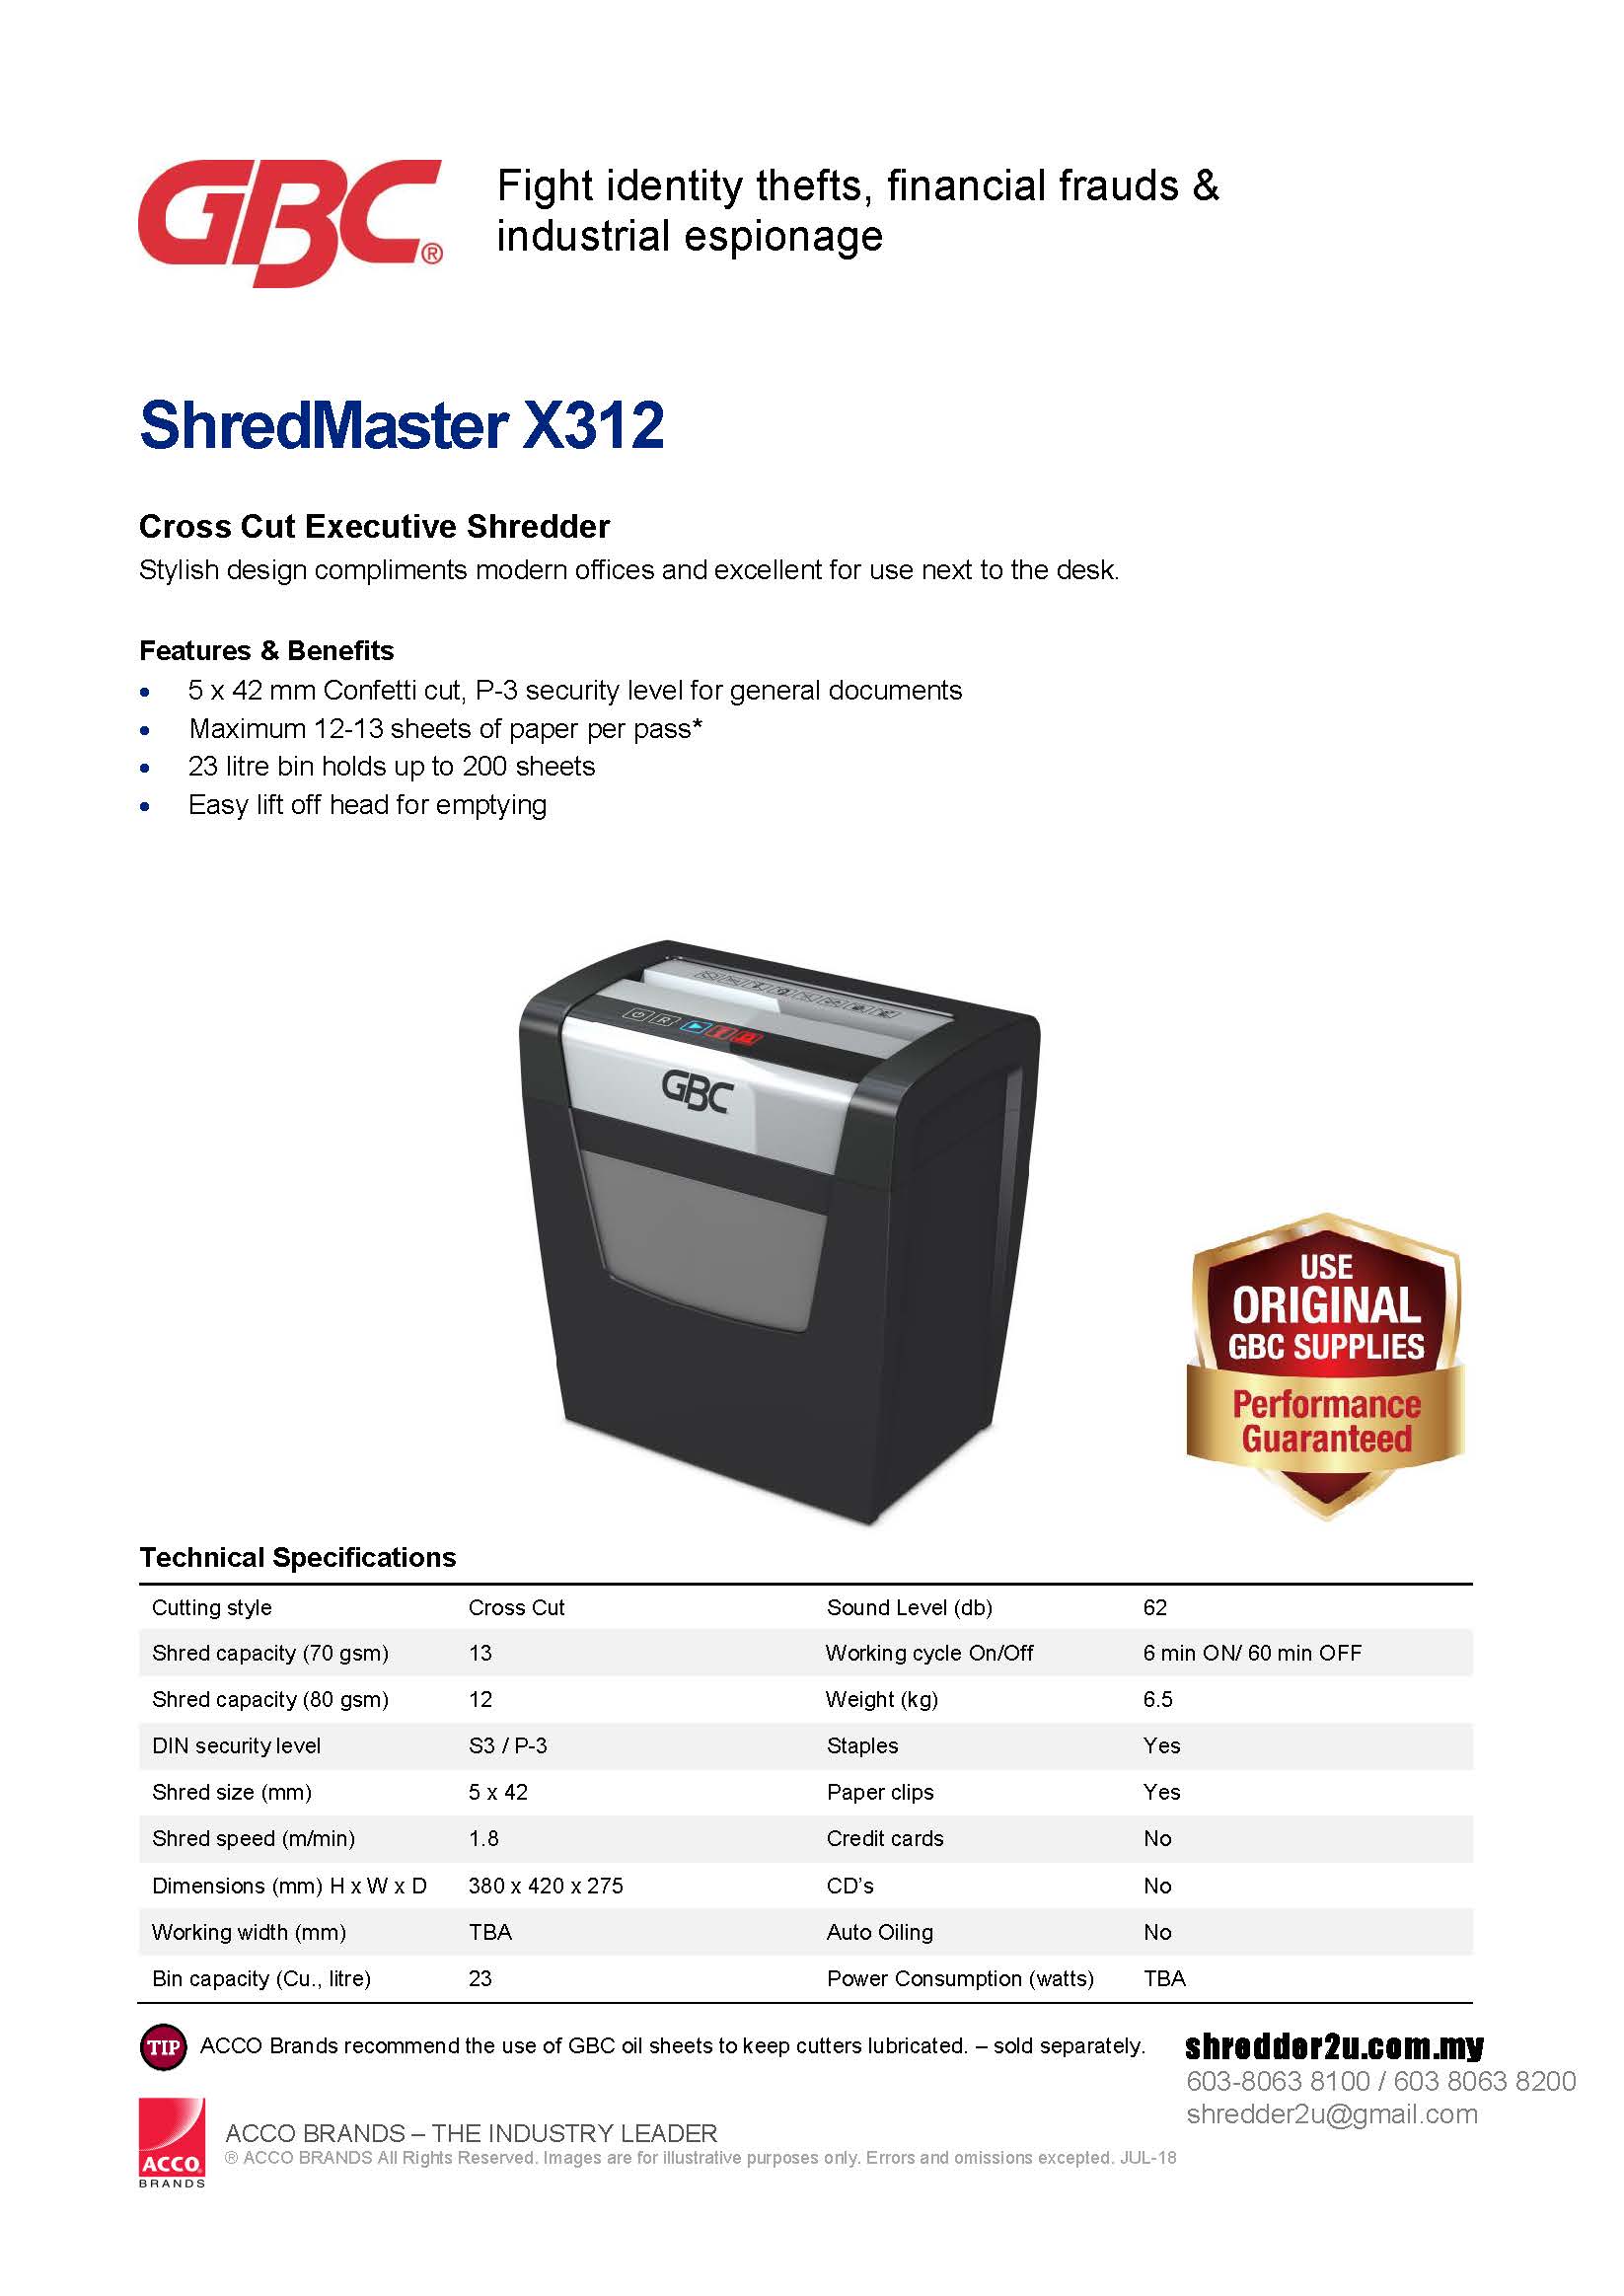 GBC ShredMaster X312 Specification